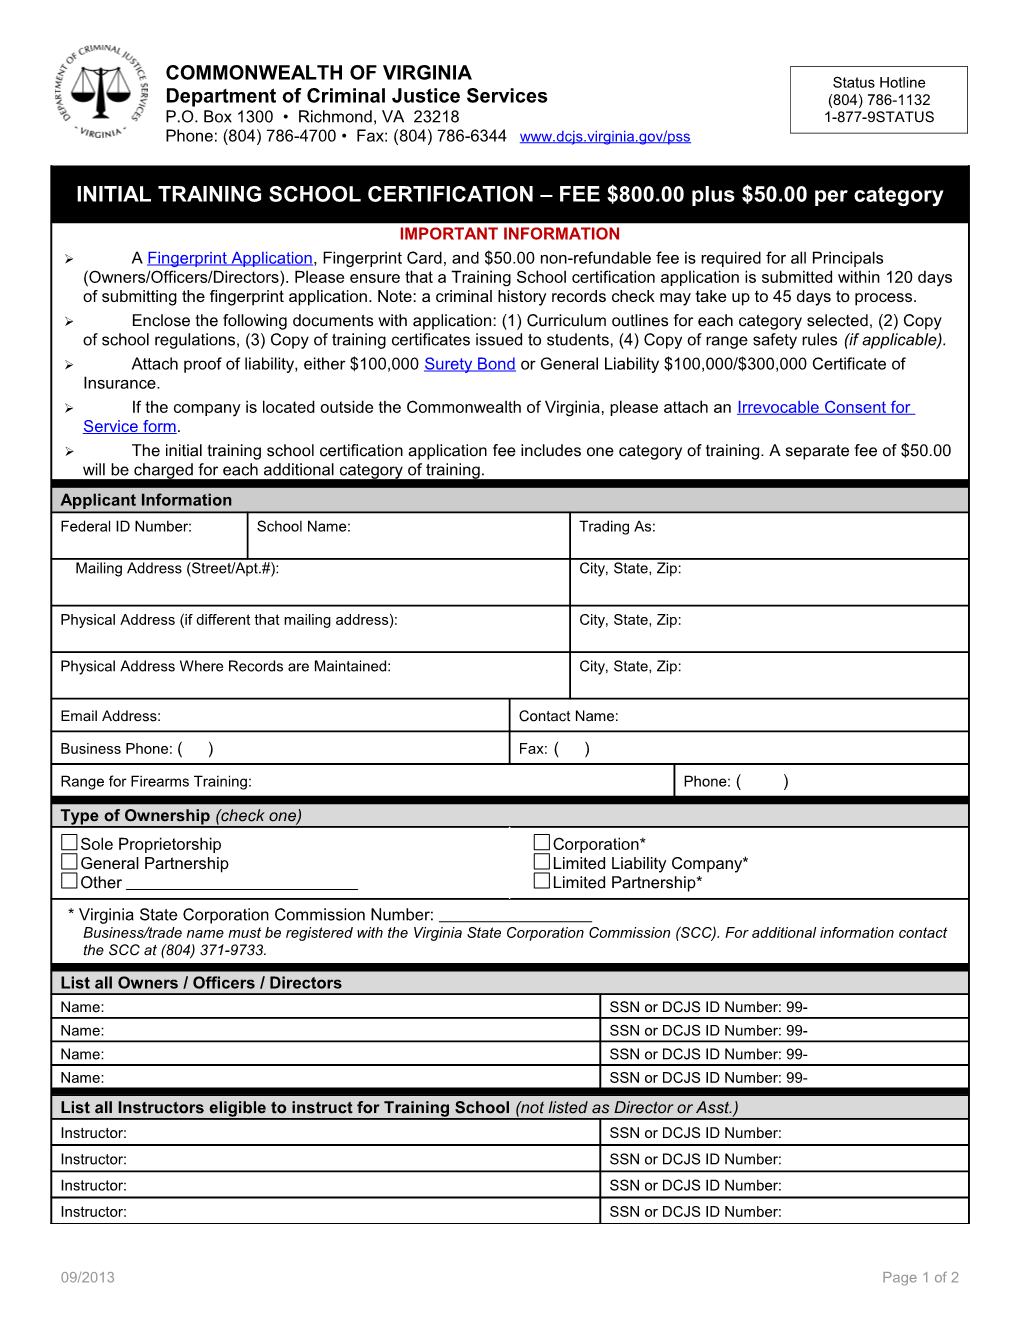 INITIAL TRAINING SCHOOL CERTIFICATION FEE $800.00 Plus $50.00 Per Category